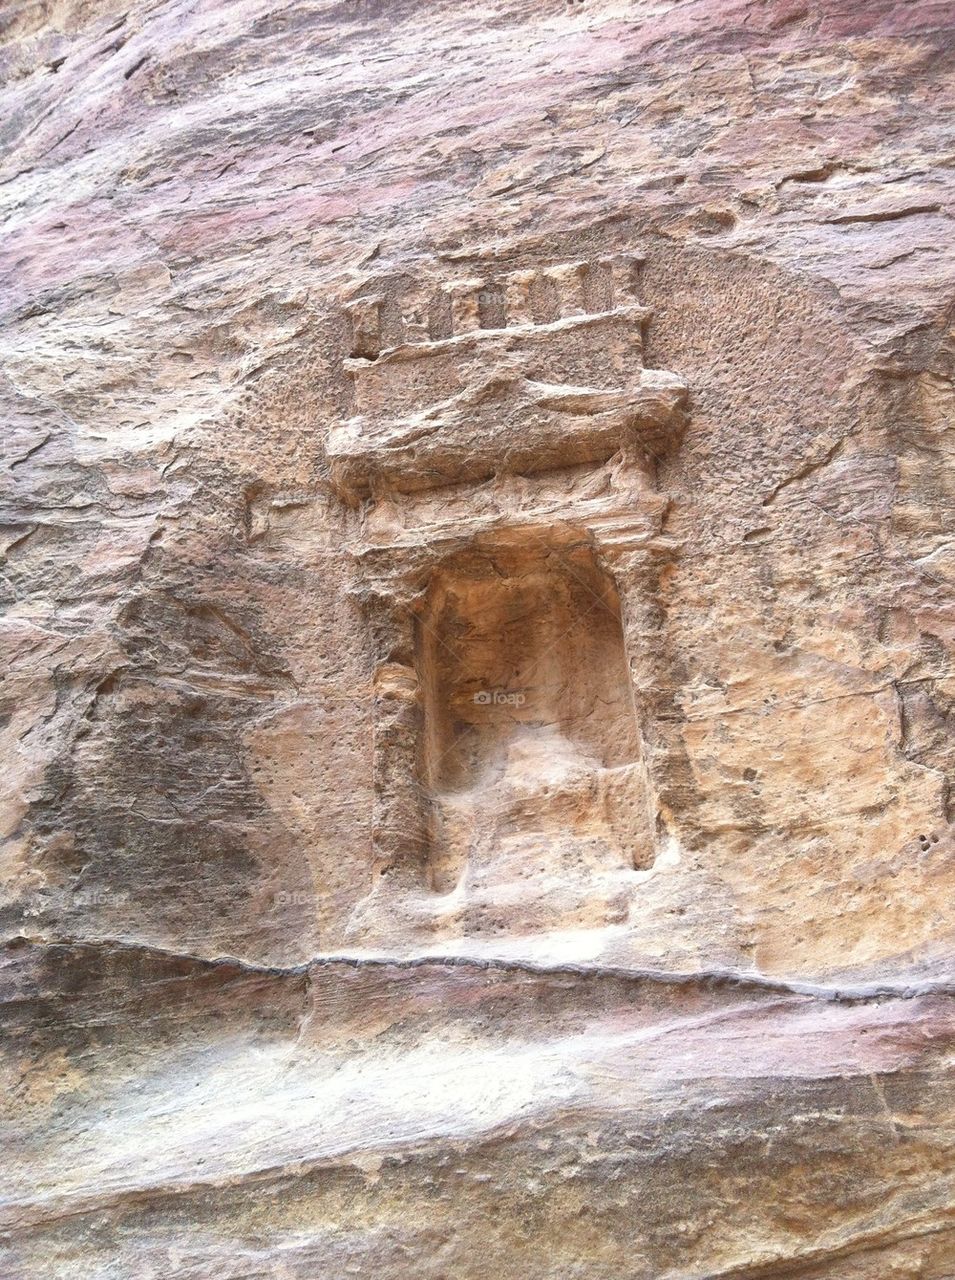 Petra civilization